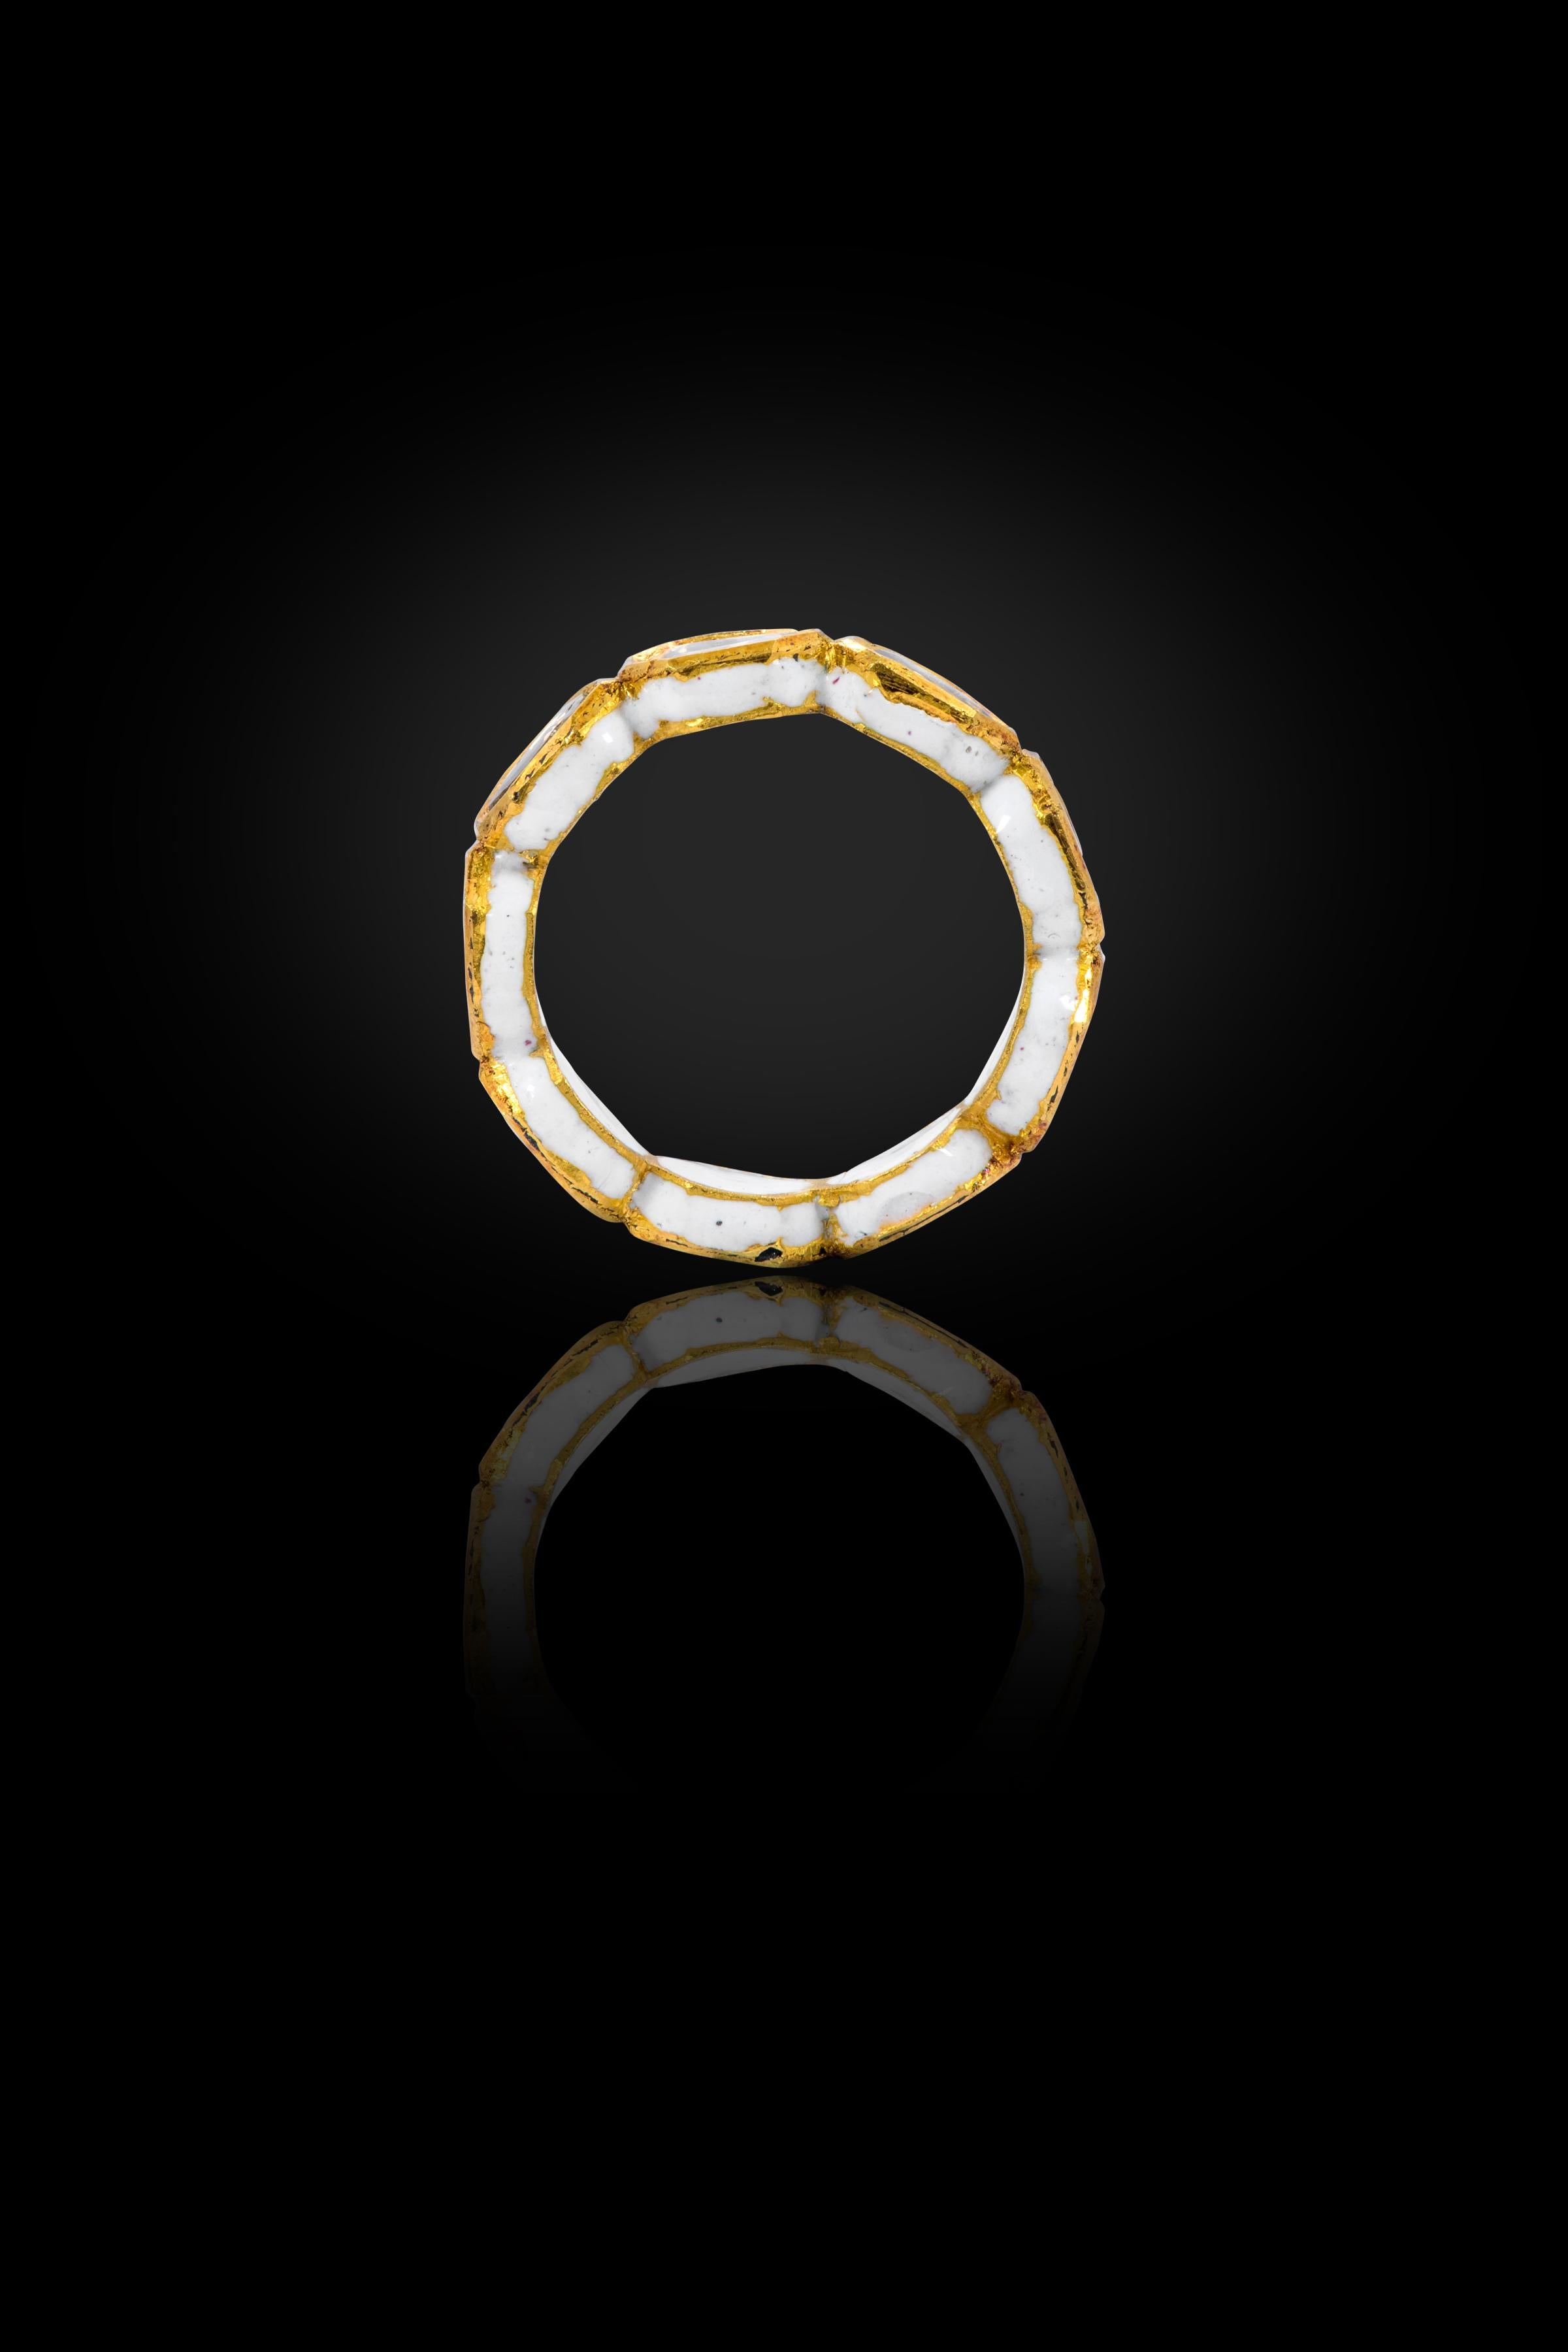 Uncut 22 Karat Gold Diamond Eternity Full-Band Ring with White Enamel Work